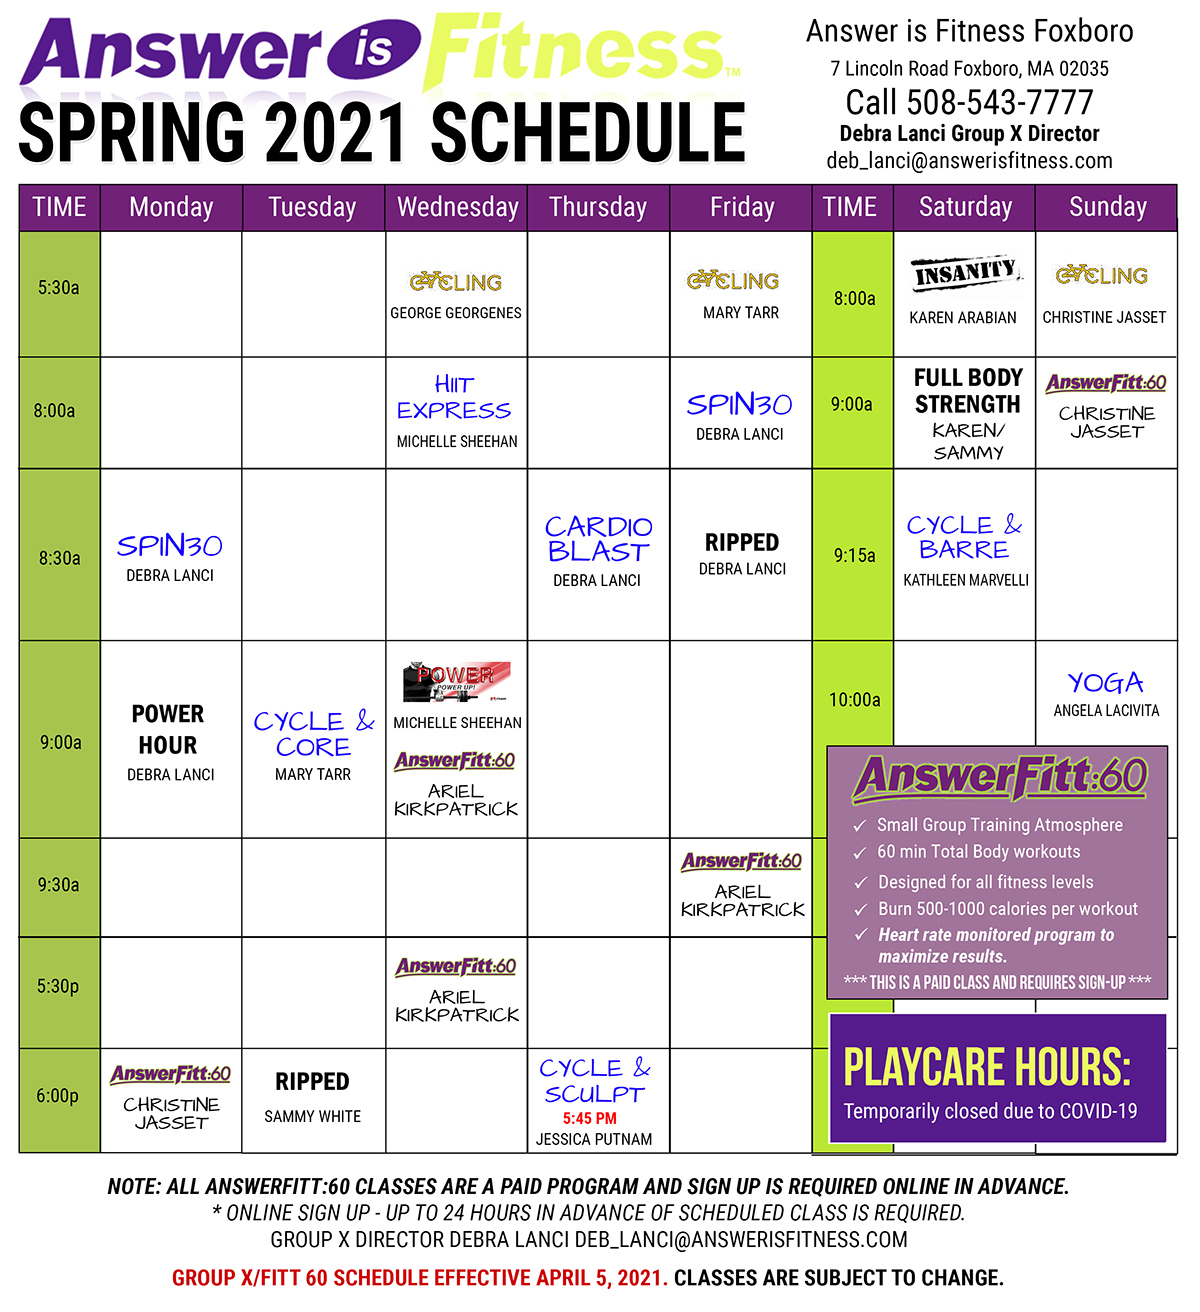 Group X Spring 2021 Schedule - Foxboro, MA